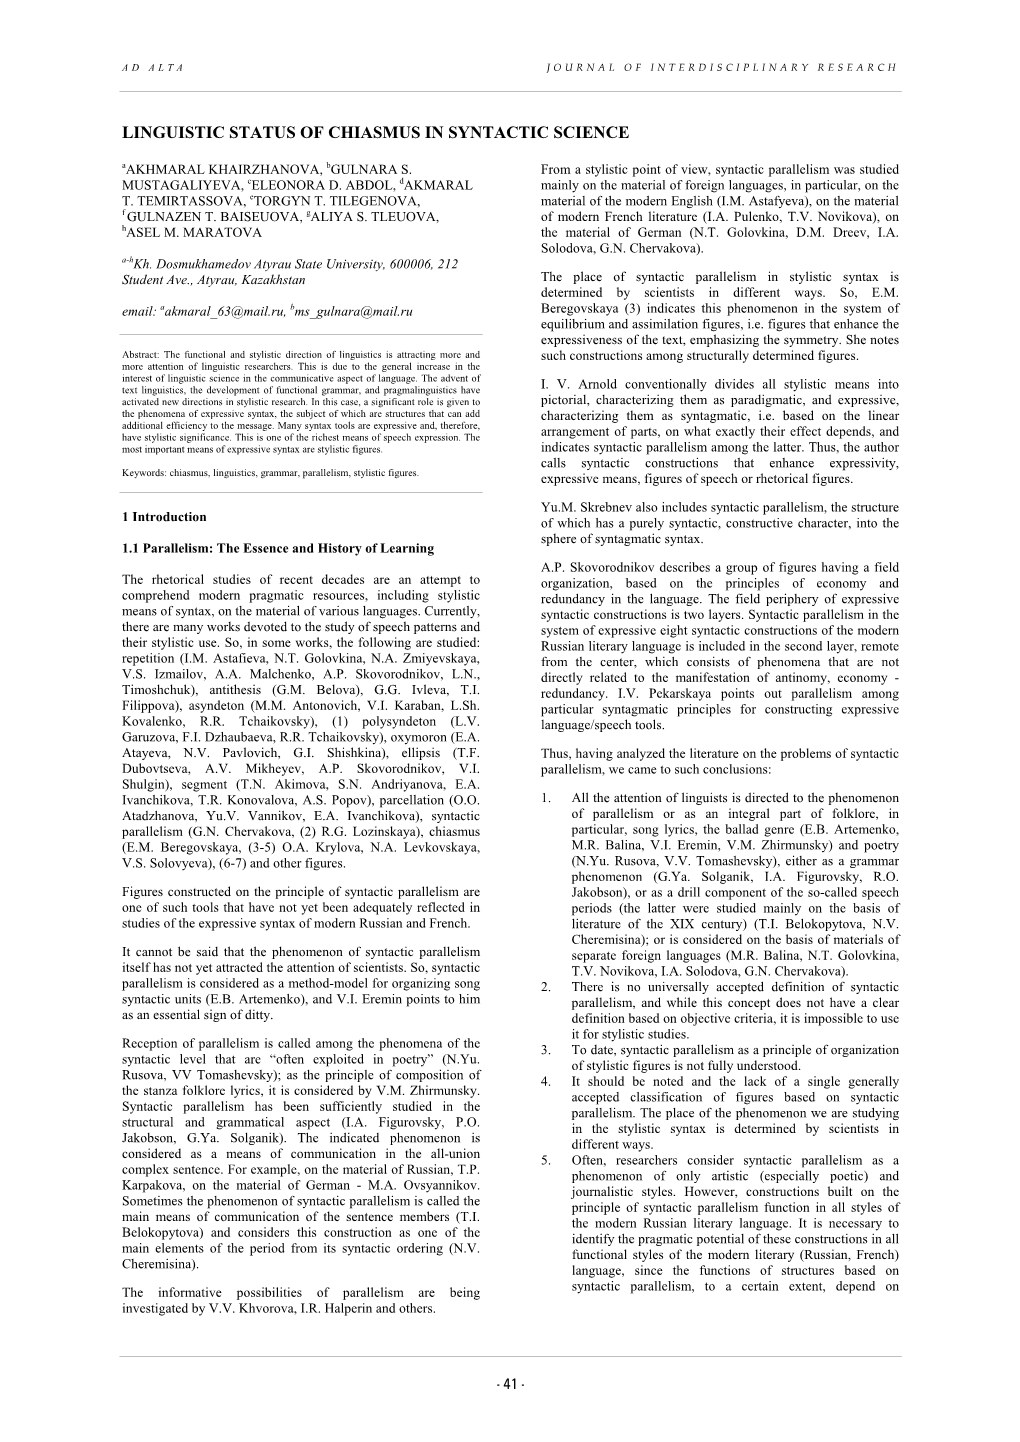 LINGUISTIC STATUS of CHIASMUS in SYNTACTIC SCIENCE Aakhmaral KHAIRZHANOVA, Bgulnara S